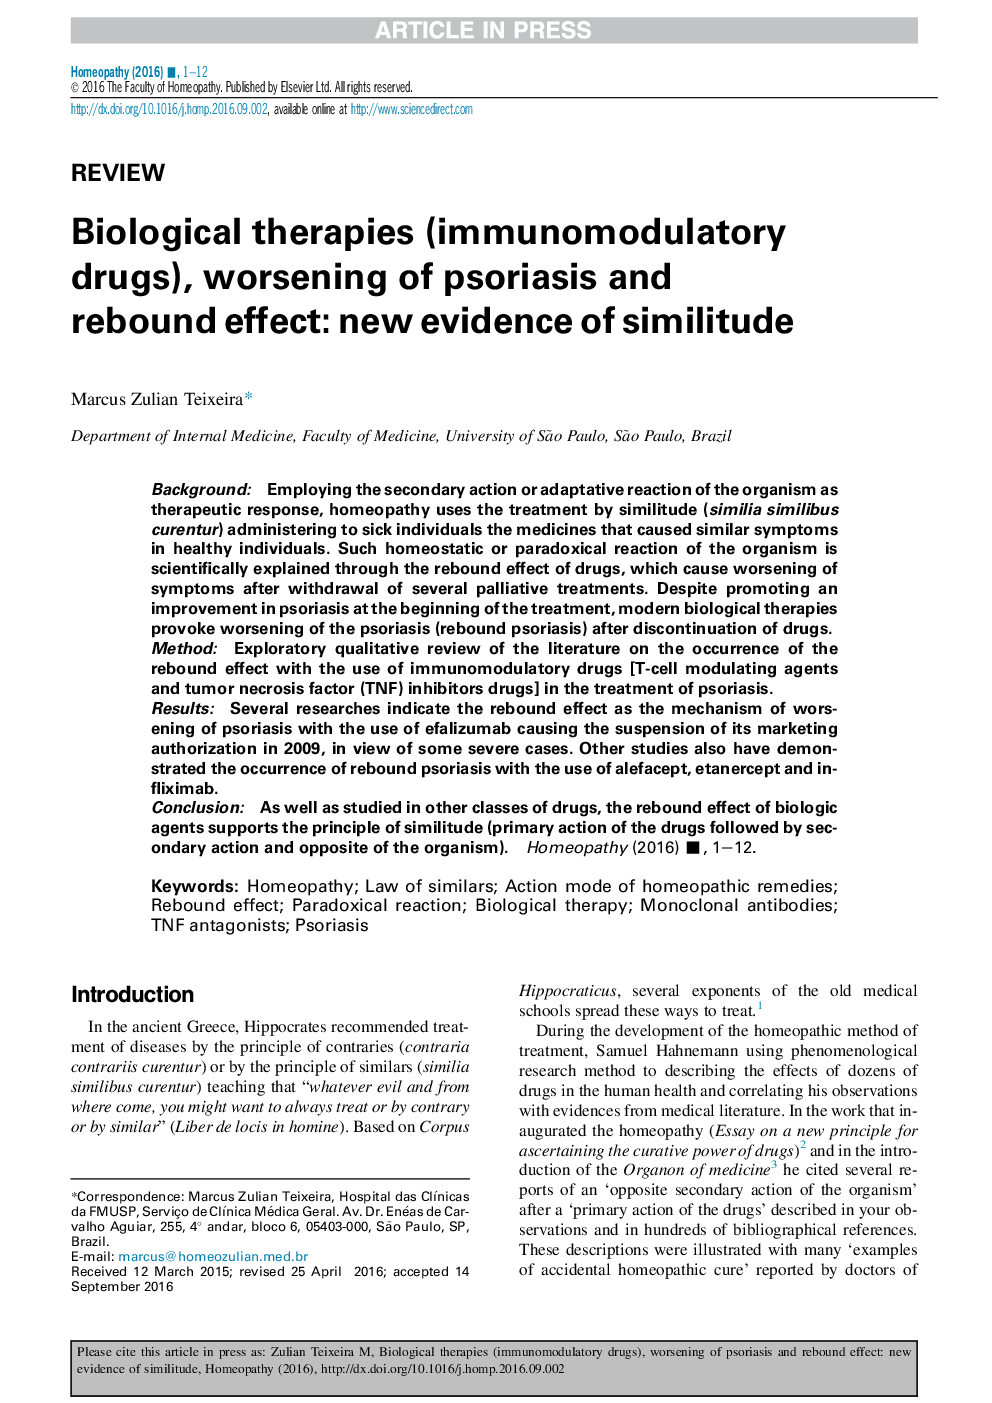 Biological therapies (immunomodulatory drugs), worsening of psoriasis and rebound effect: new evidence of similitude